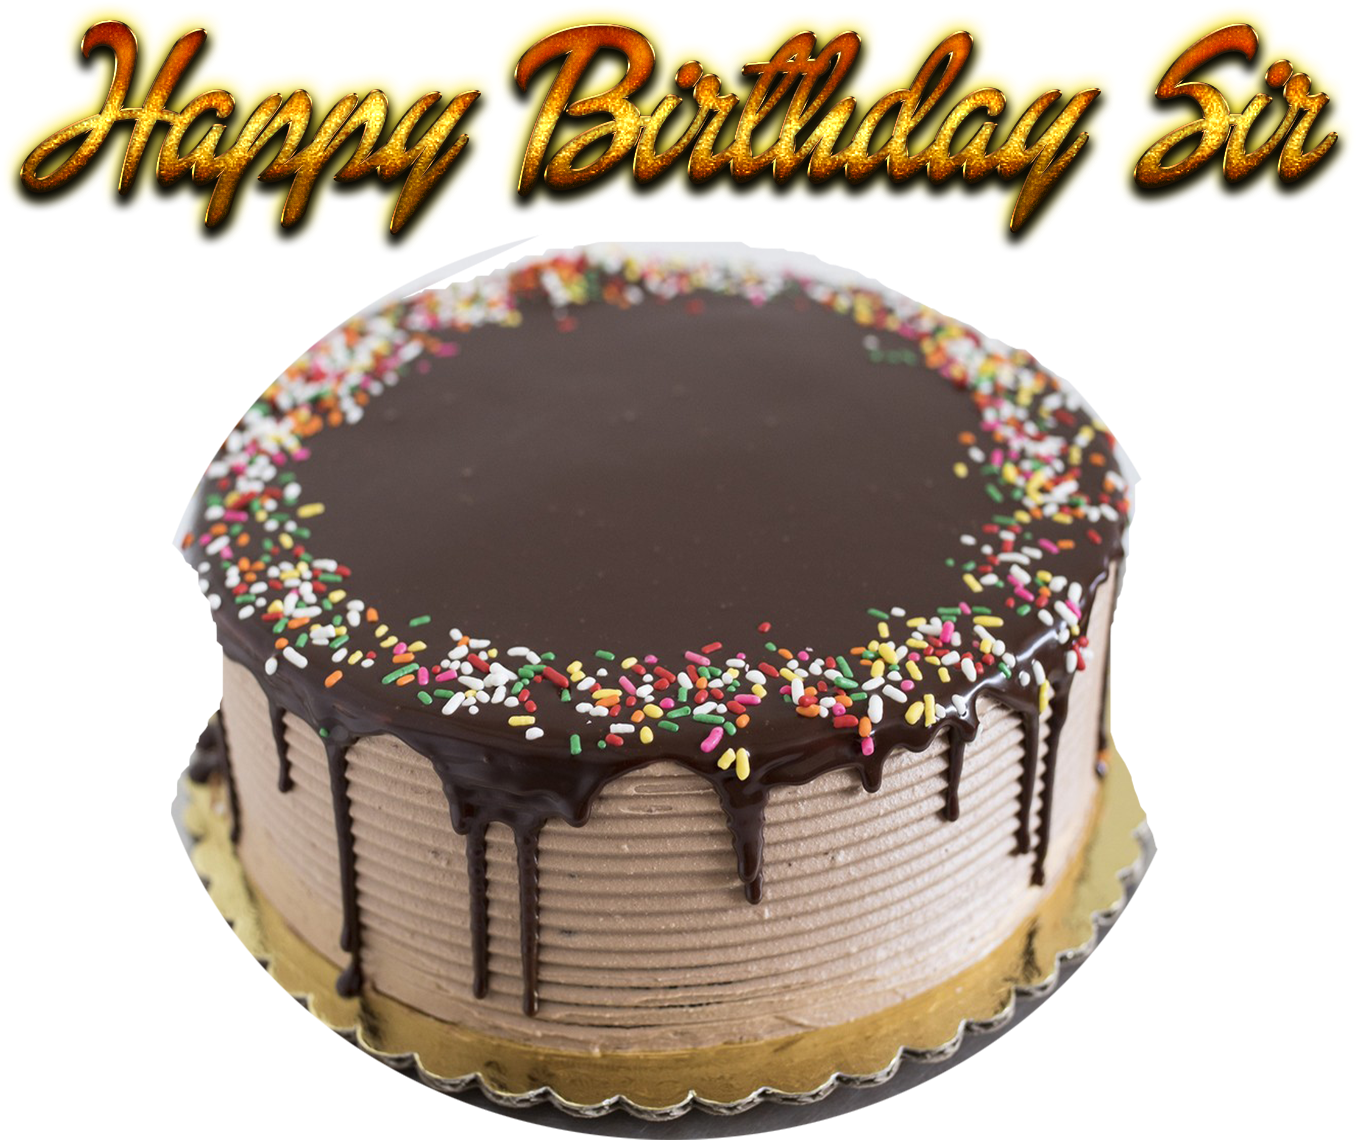 Happy Birthday Sir Cake Image PNG